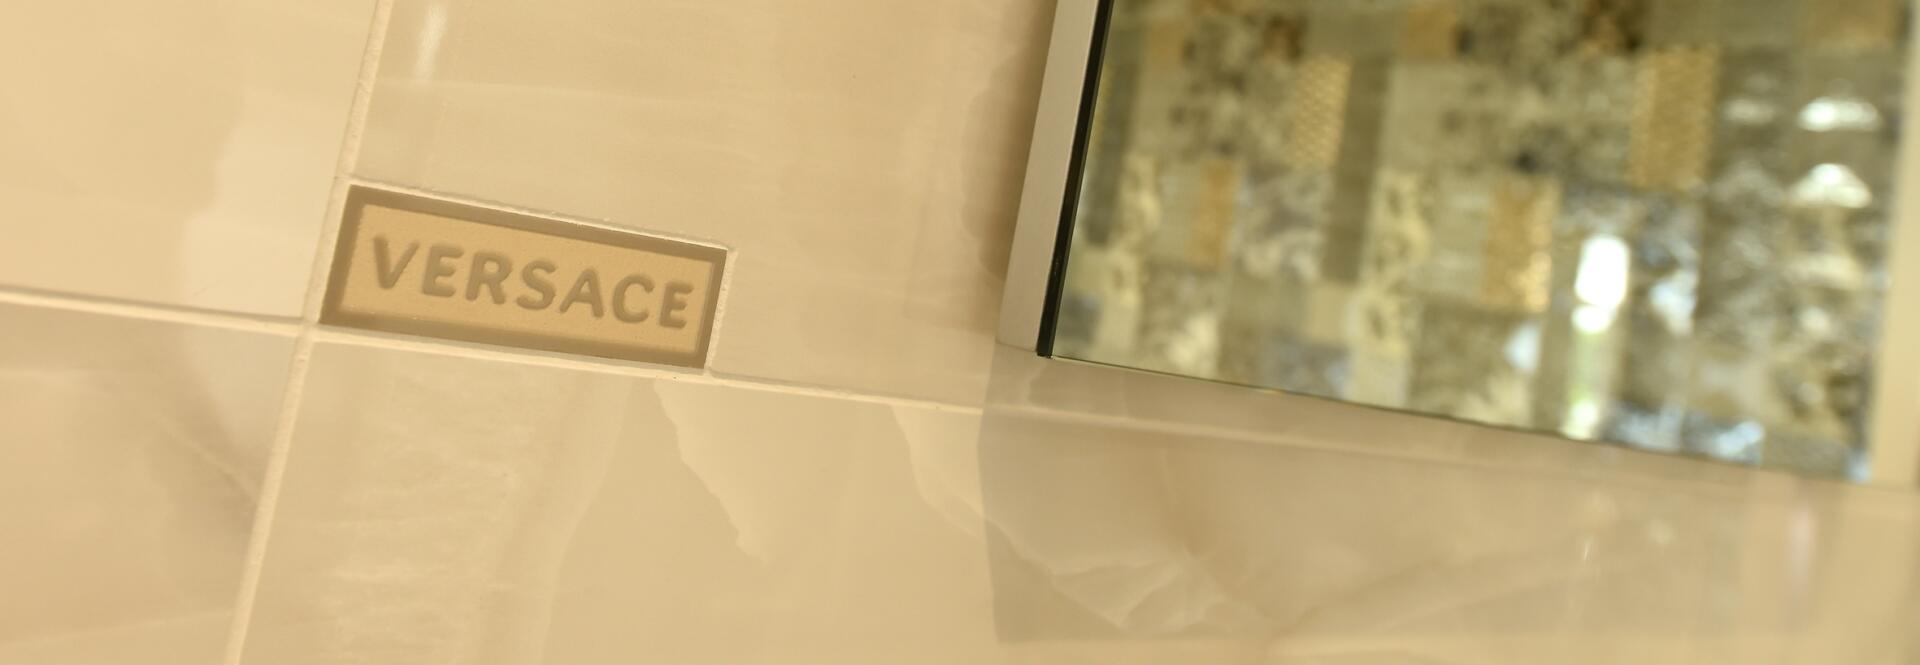 Versace tiles on bathroom wall